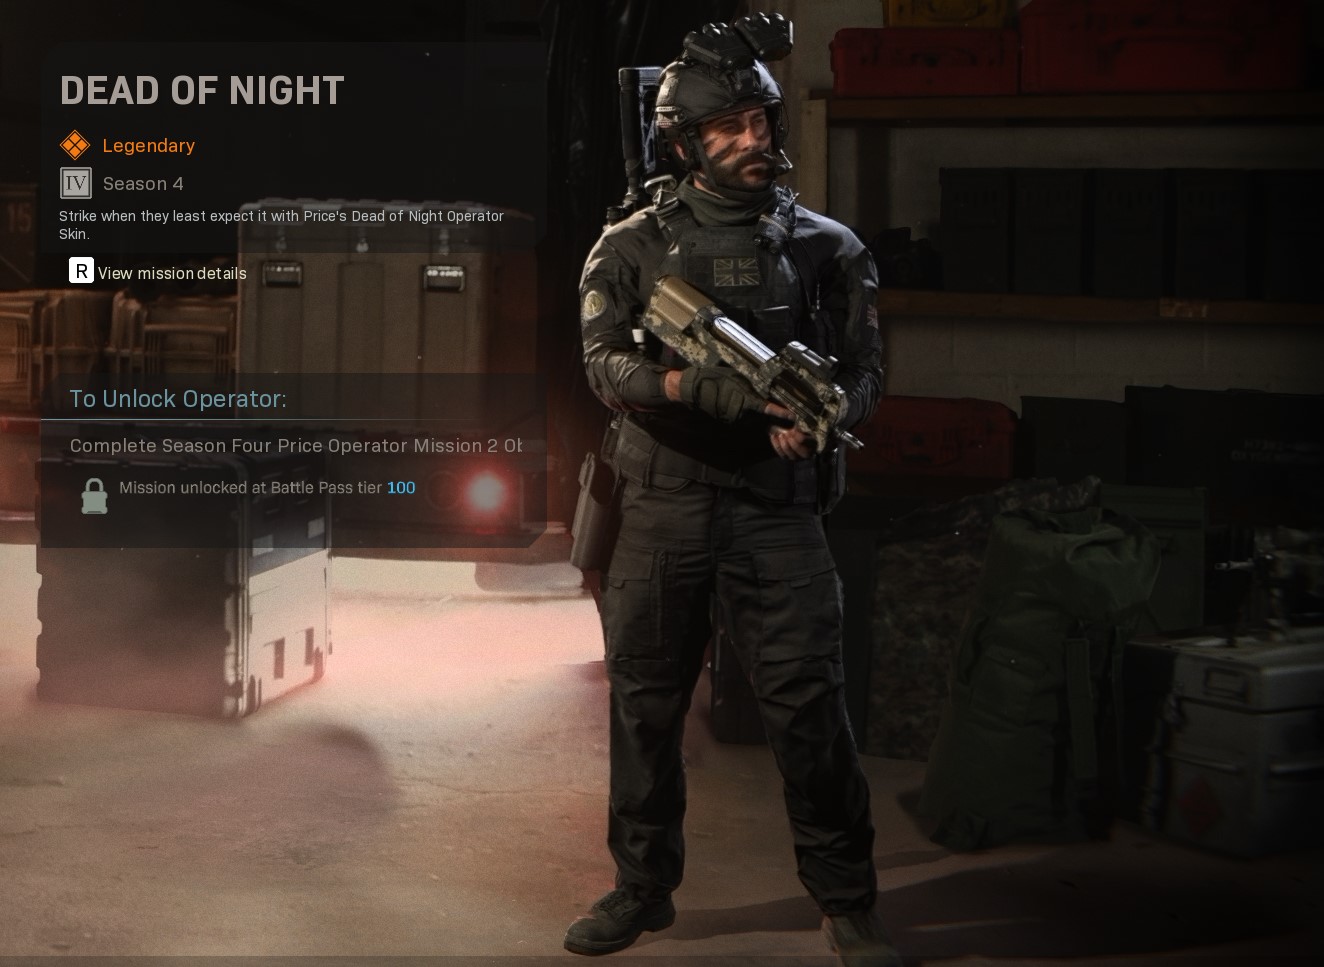  How to unlock Price Dead of Night skin in Call of Duty – Season 4 